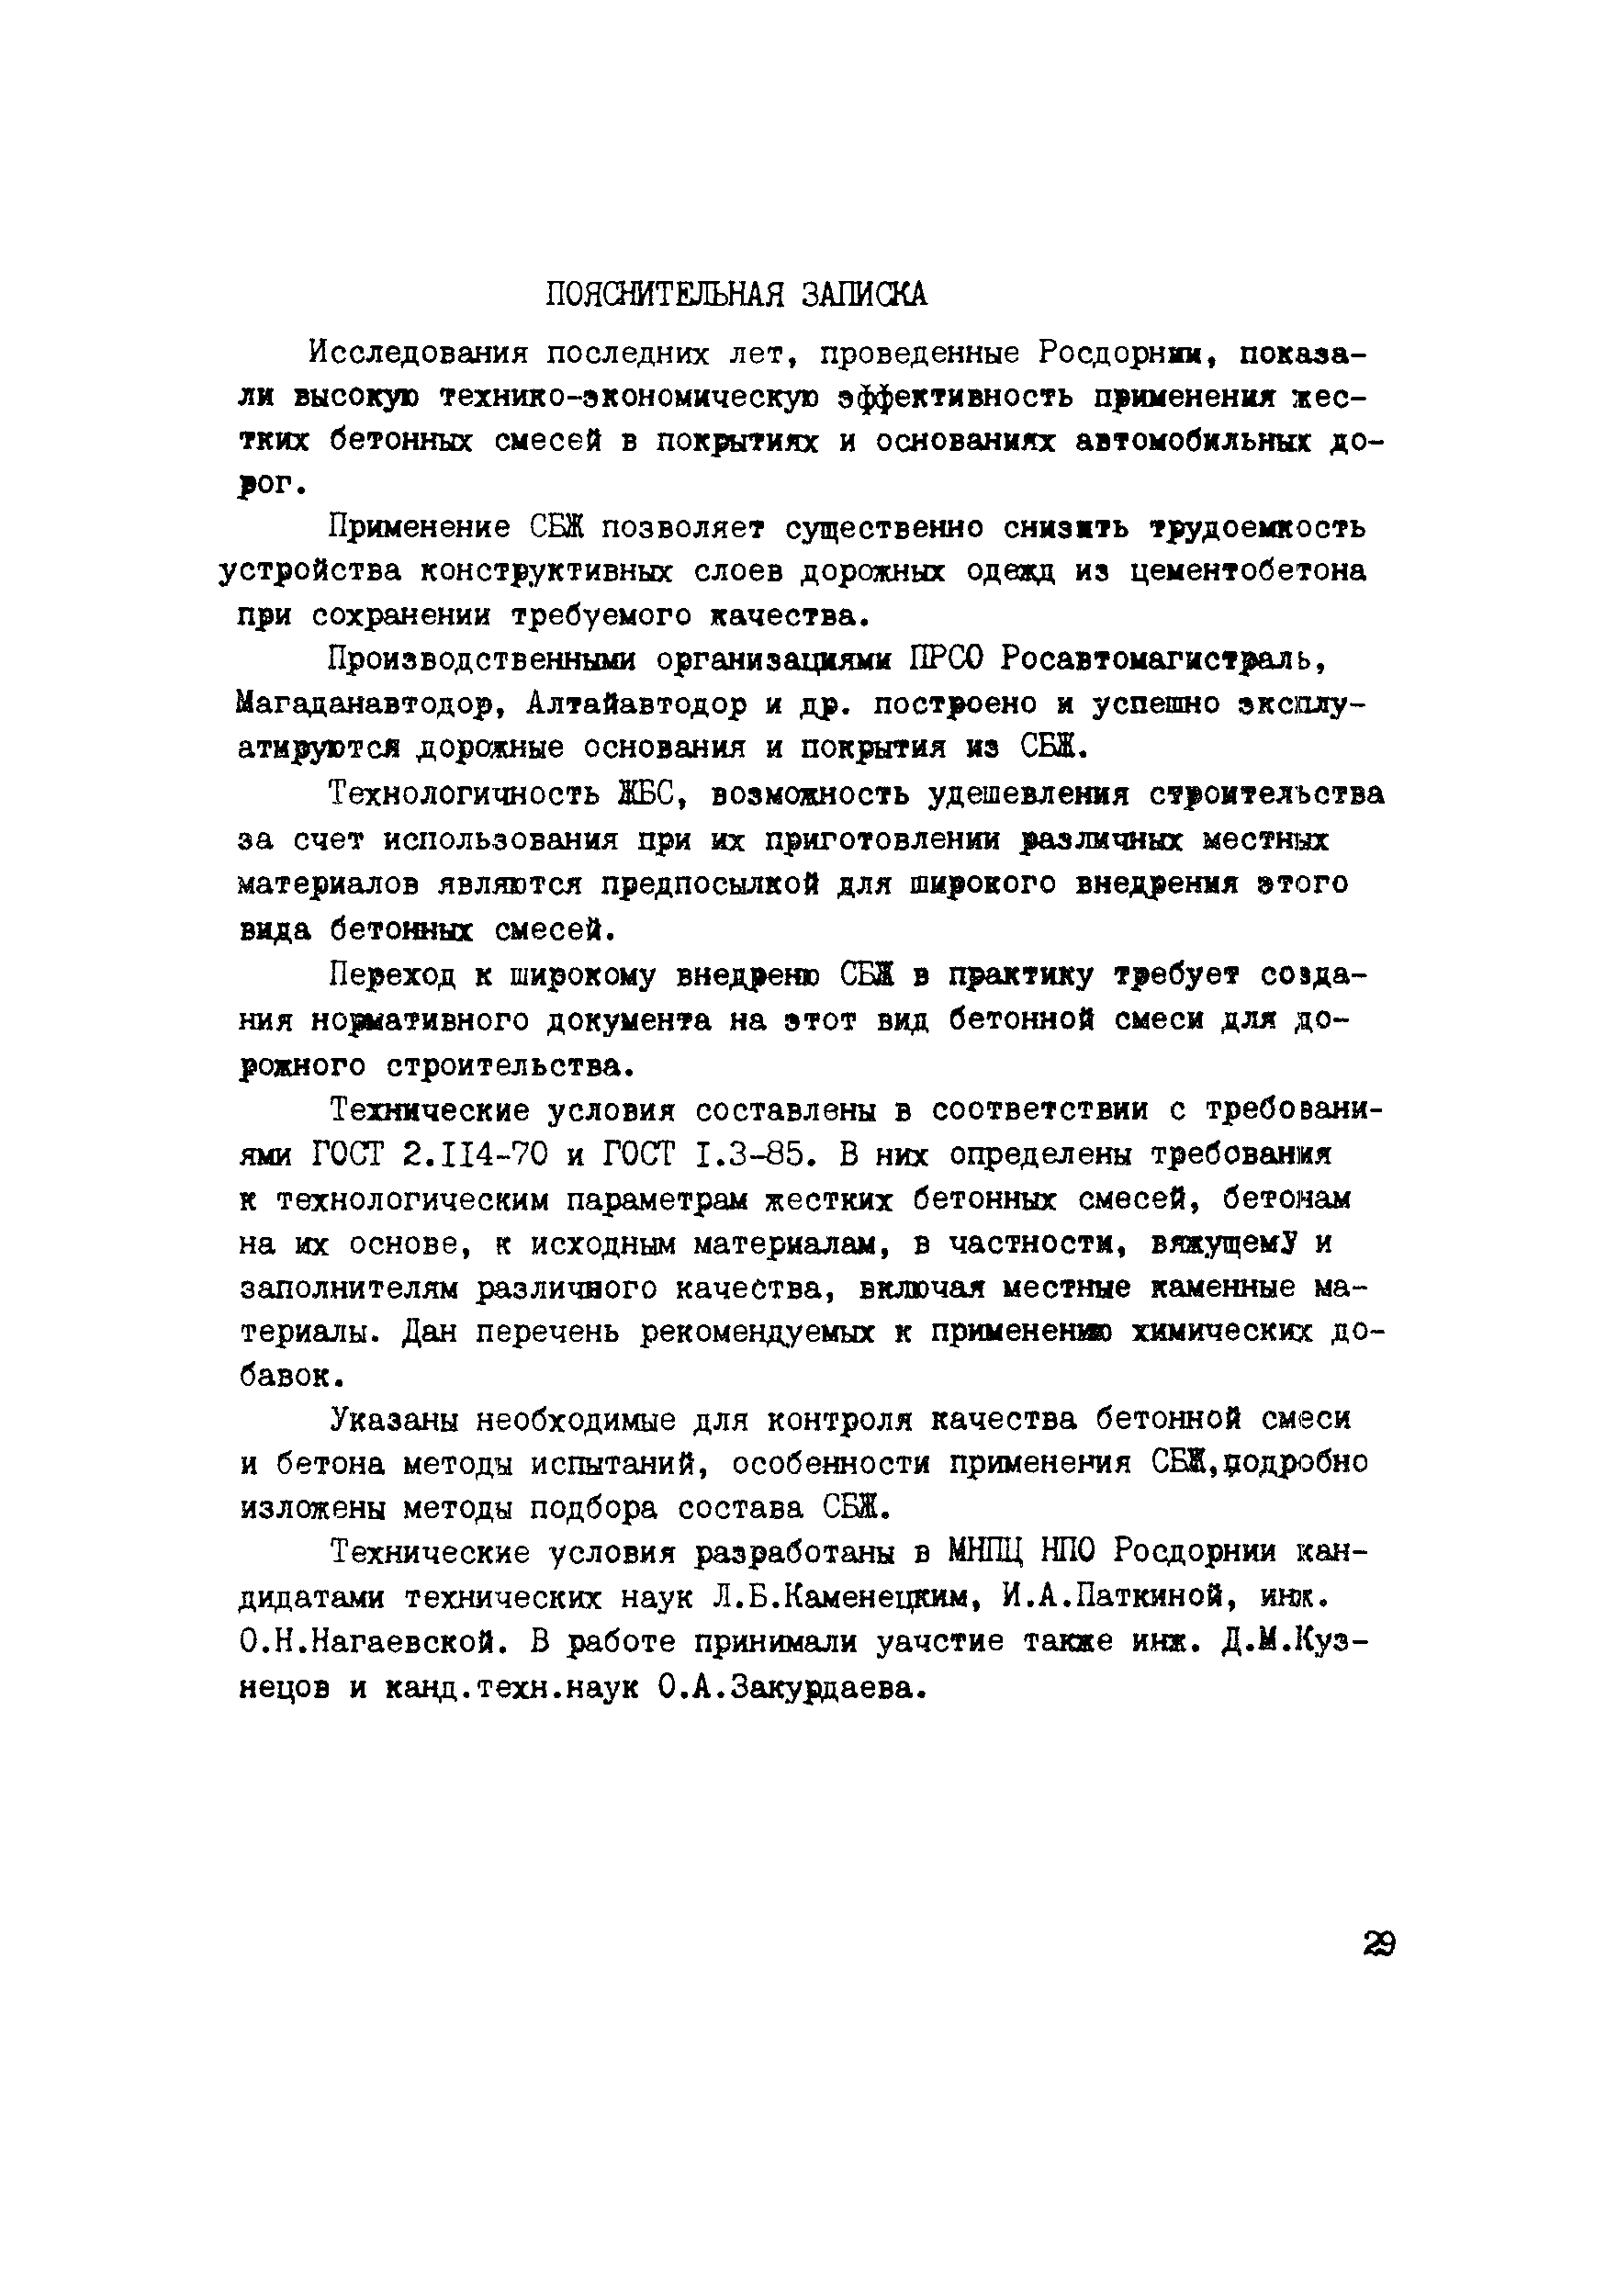 ТУ 218 РСФСР 620-90